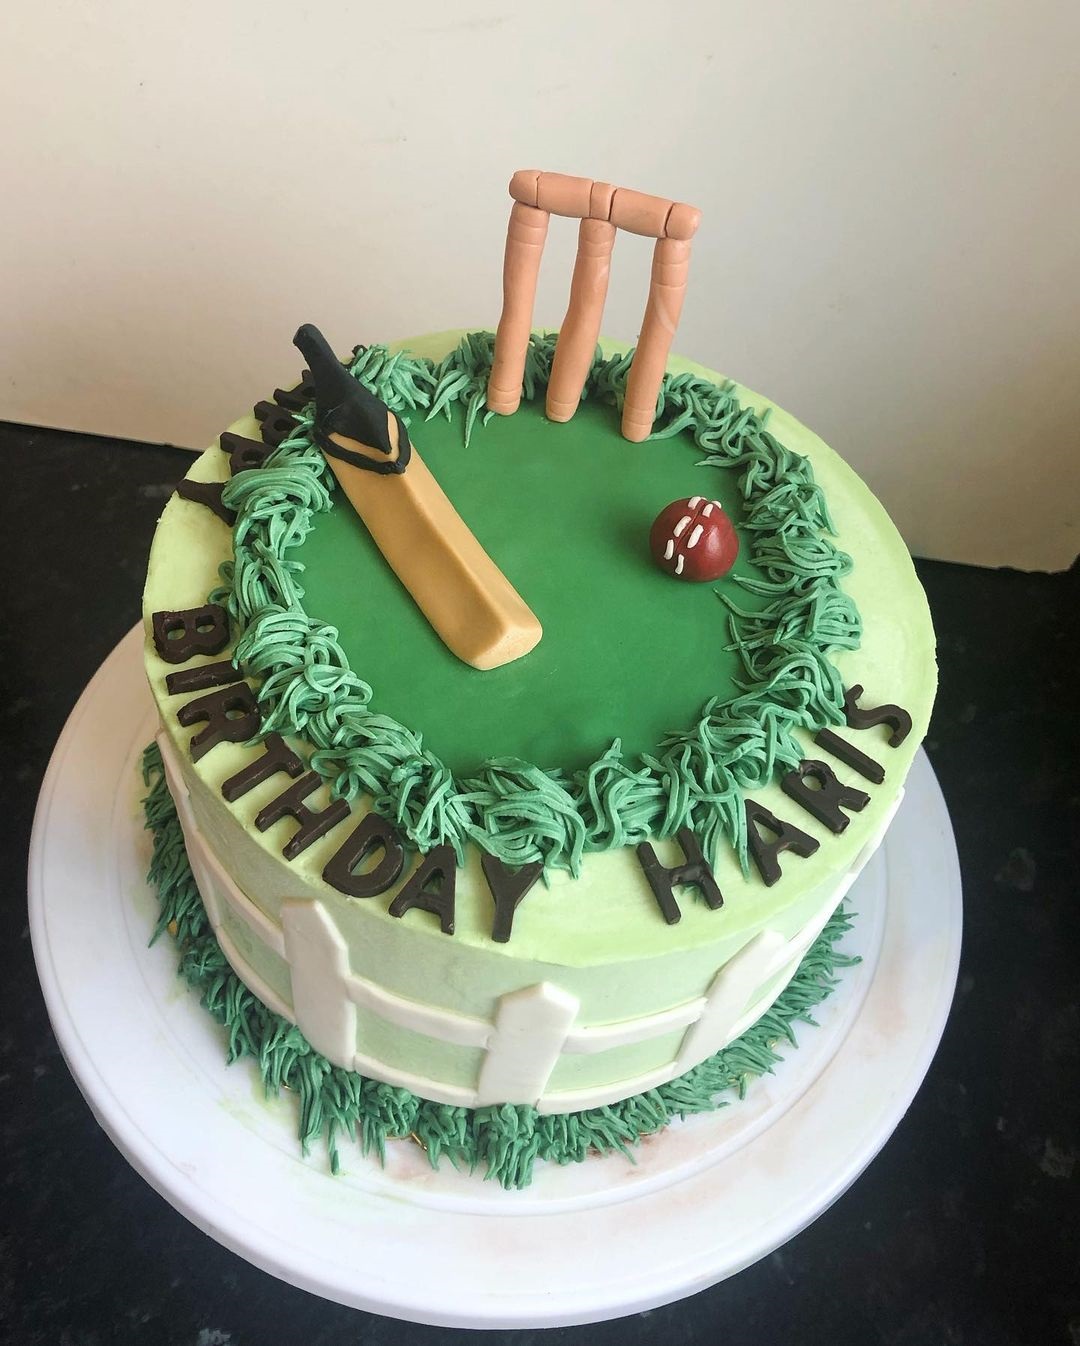 Cricket Theme Cake online, Cricket tTheme Cake Near Me | Yummy cake